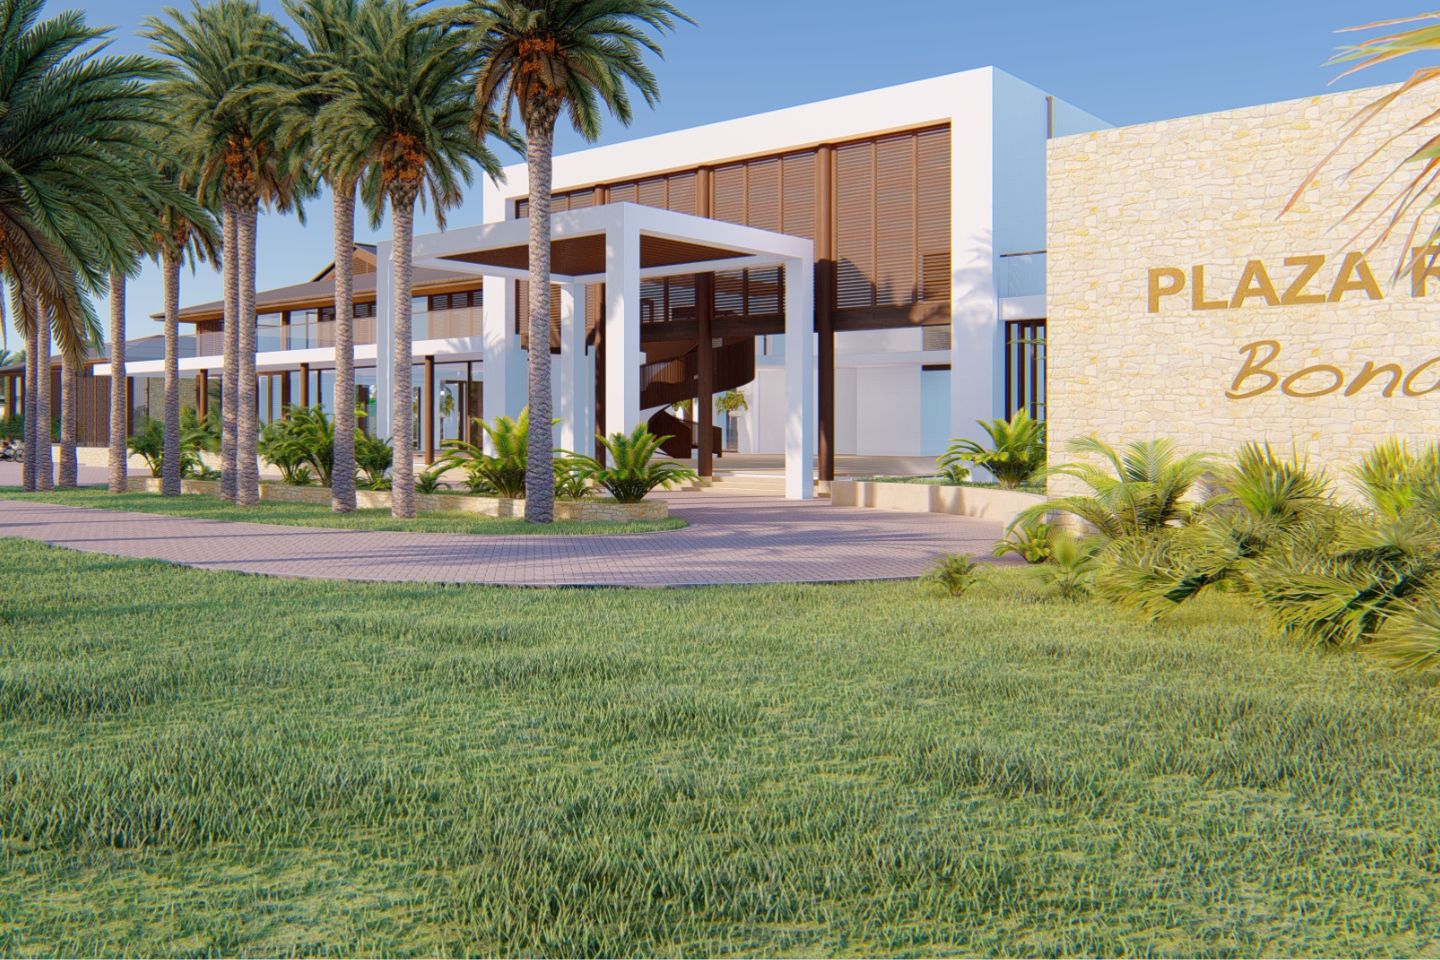 Plaza Beach Resort Bonaire AG architecten oprijlaan